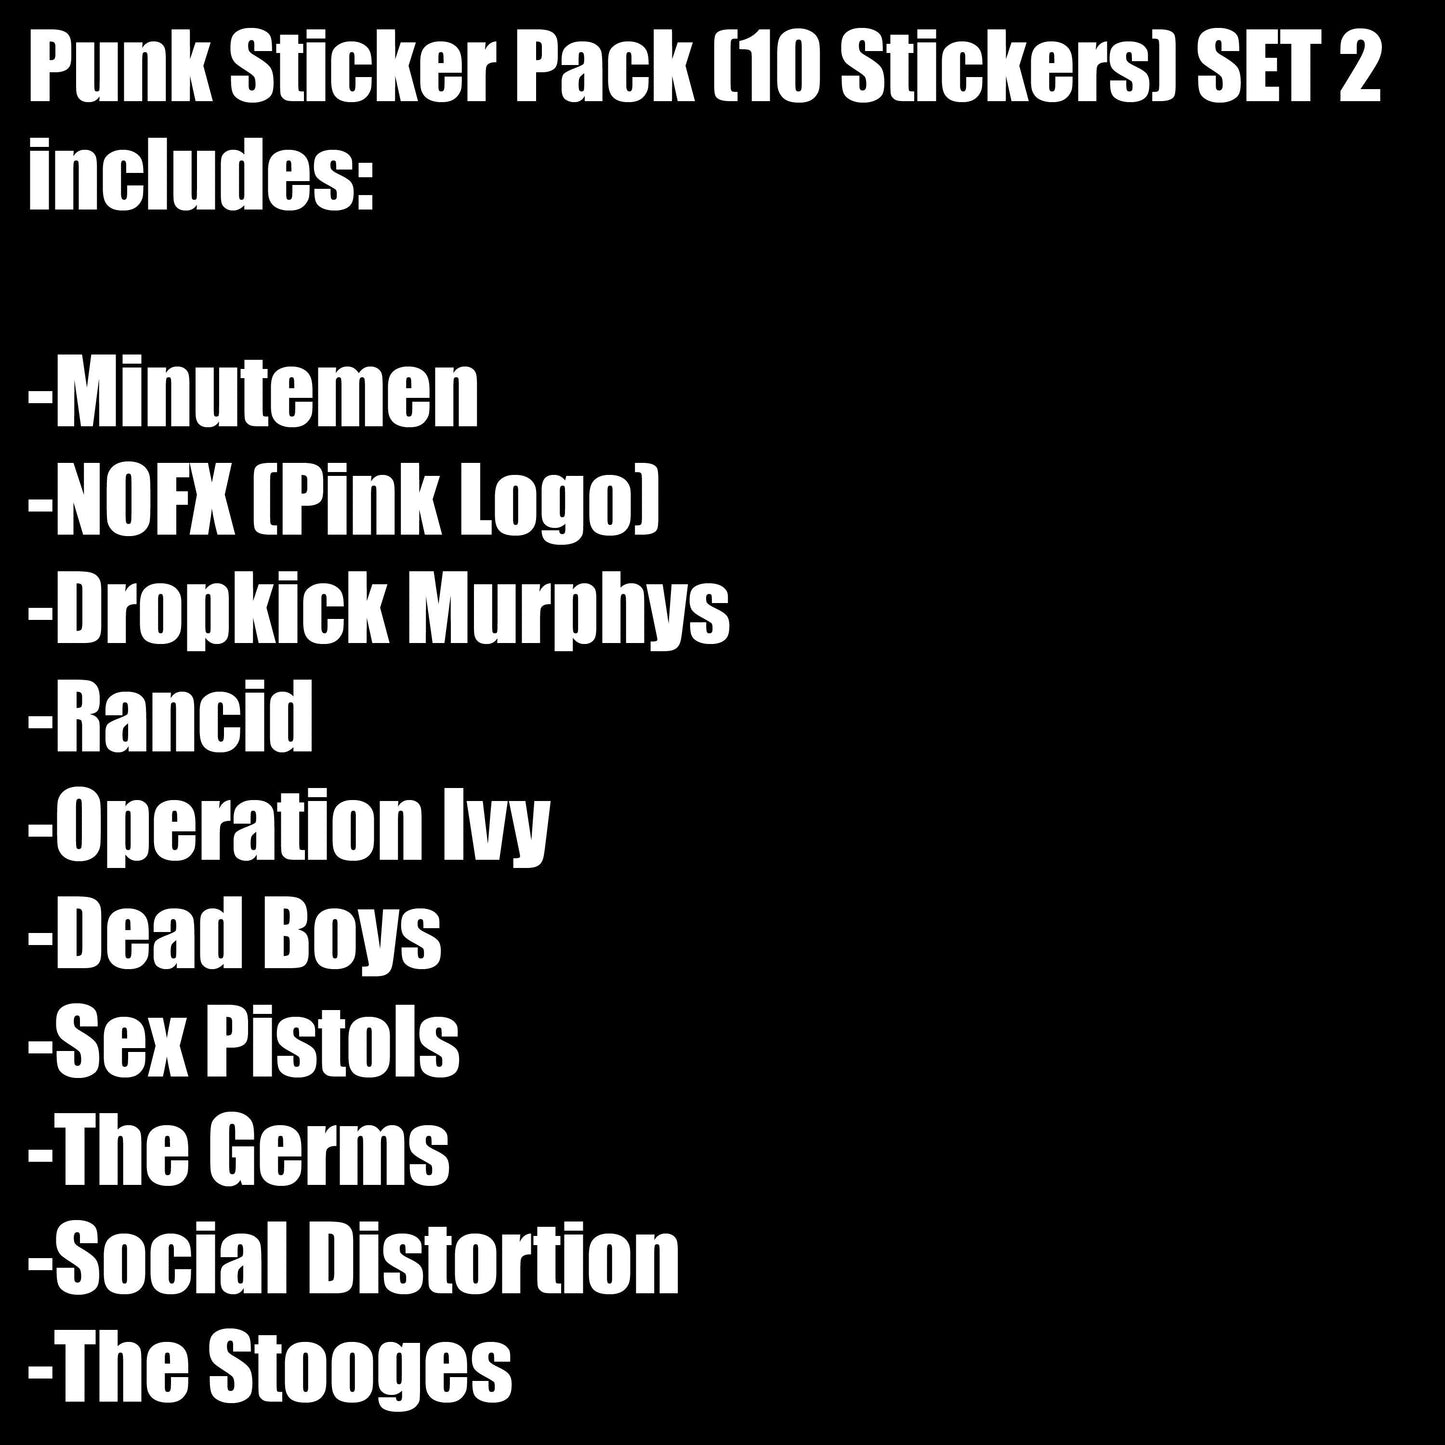 Punk Sticker Pack (10 Stickers) Set 2